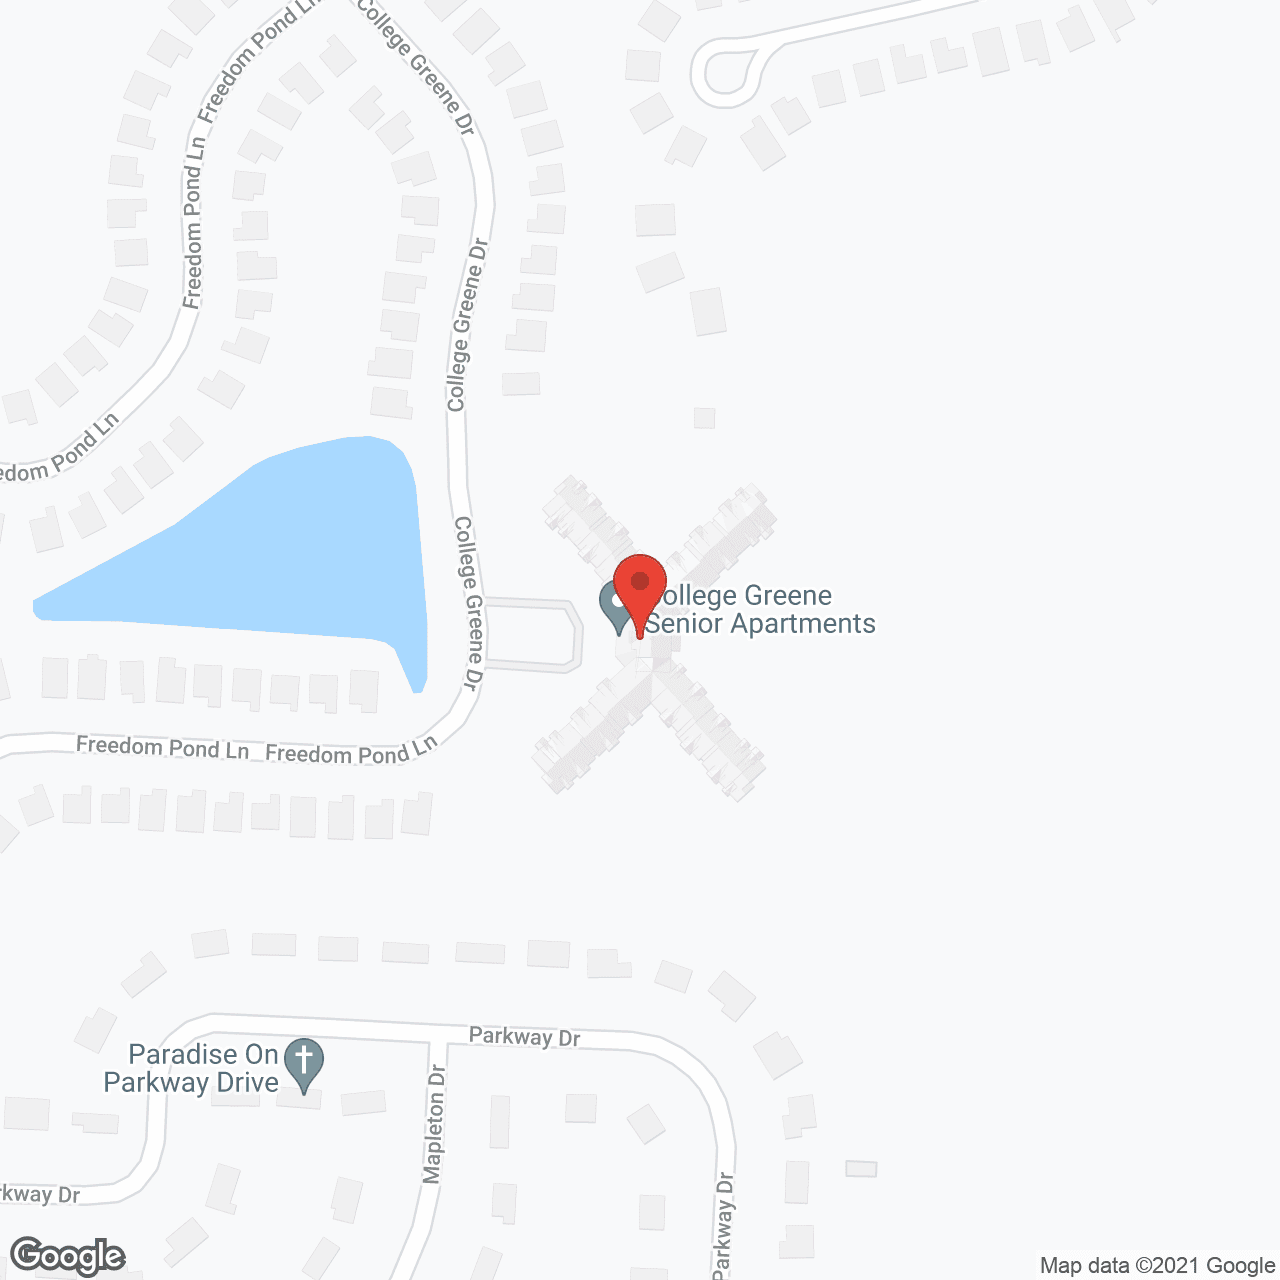 College Greene Senior Apartments in google map